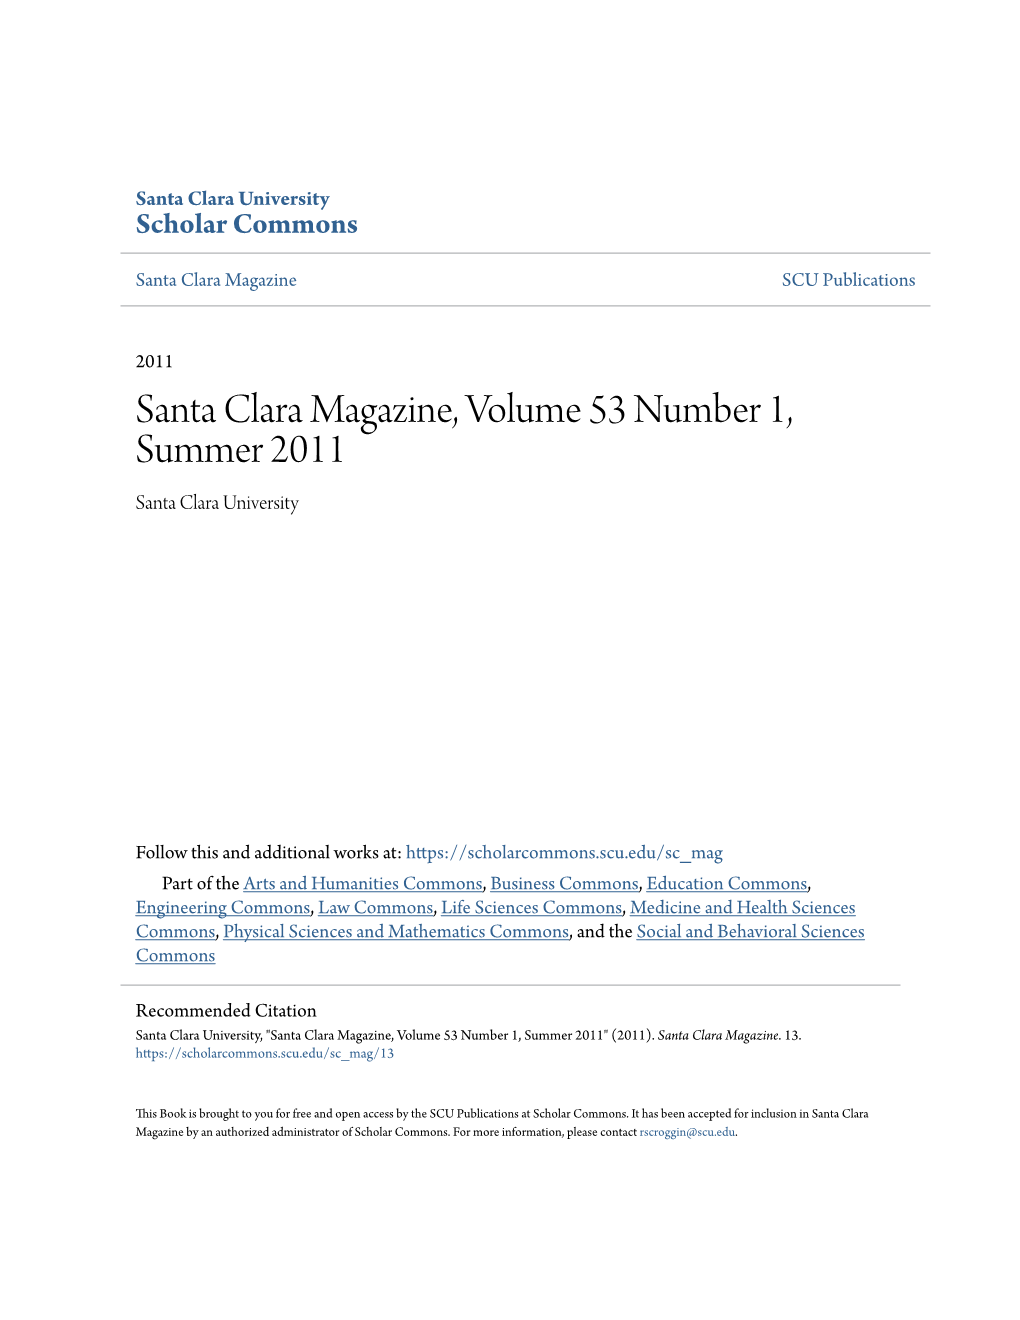 Santa Clara Magazine, Volume 53 Number 1, Summer 2011 Santa Clara University